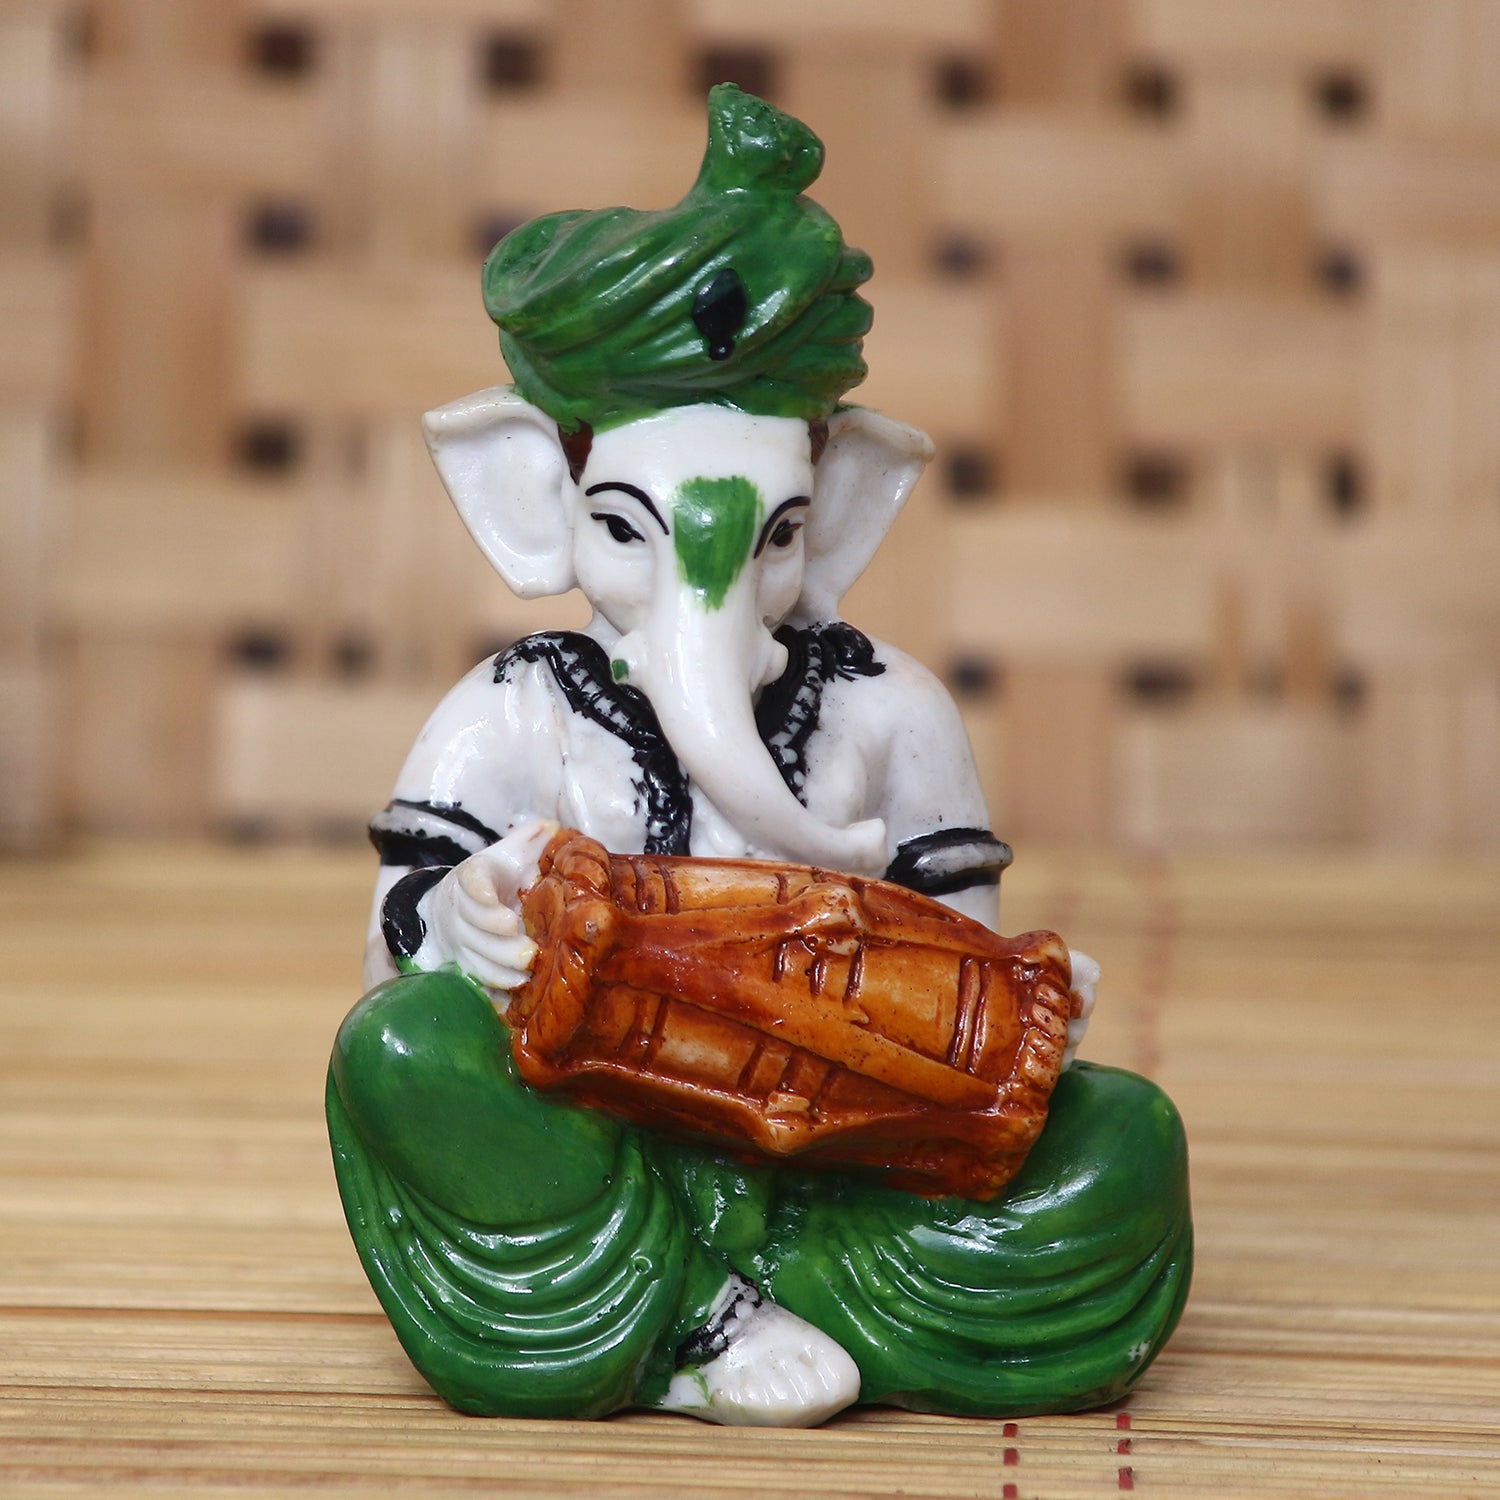 Lord Ganesha Idol Playing Dholak Musical Instrument 1